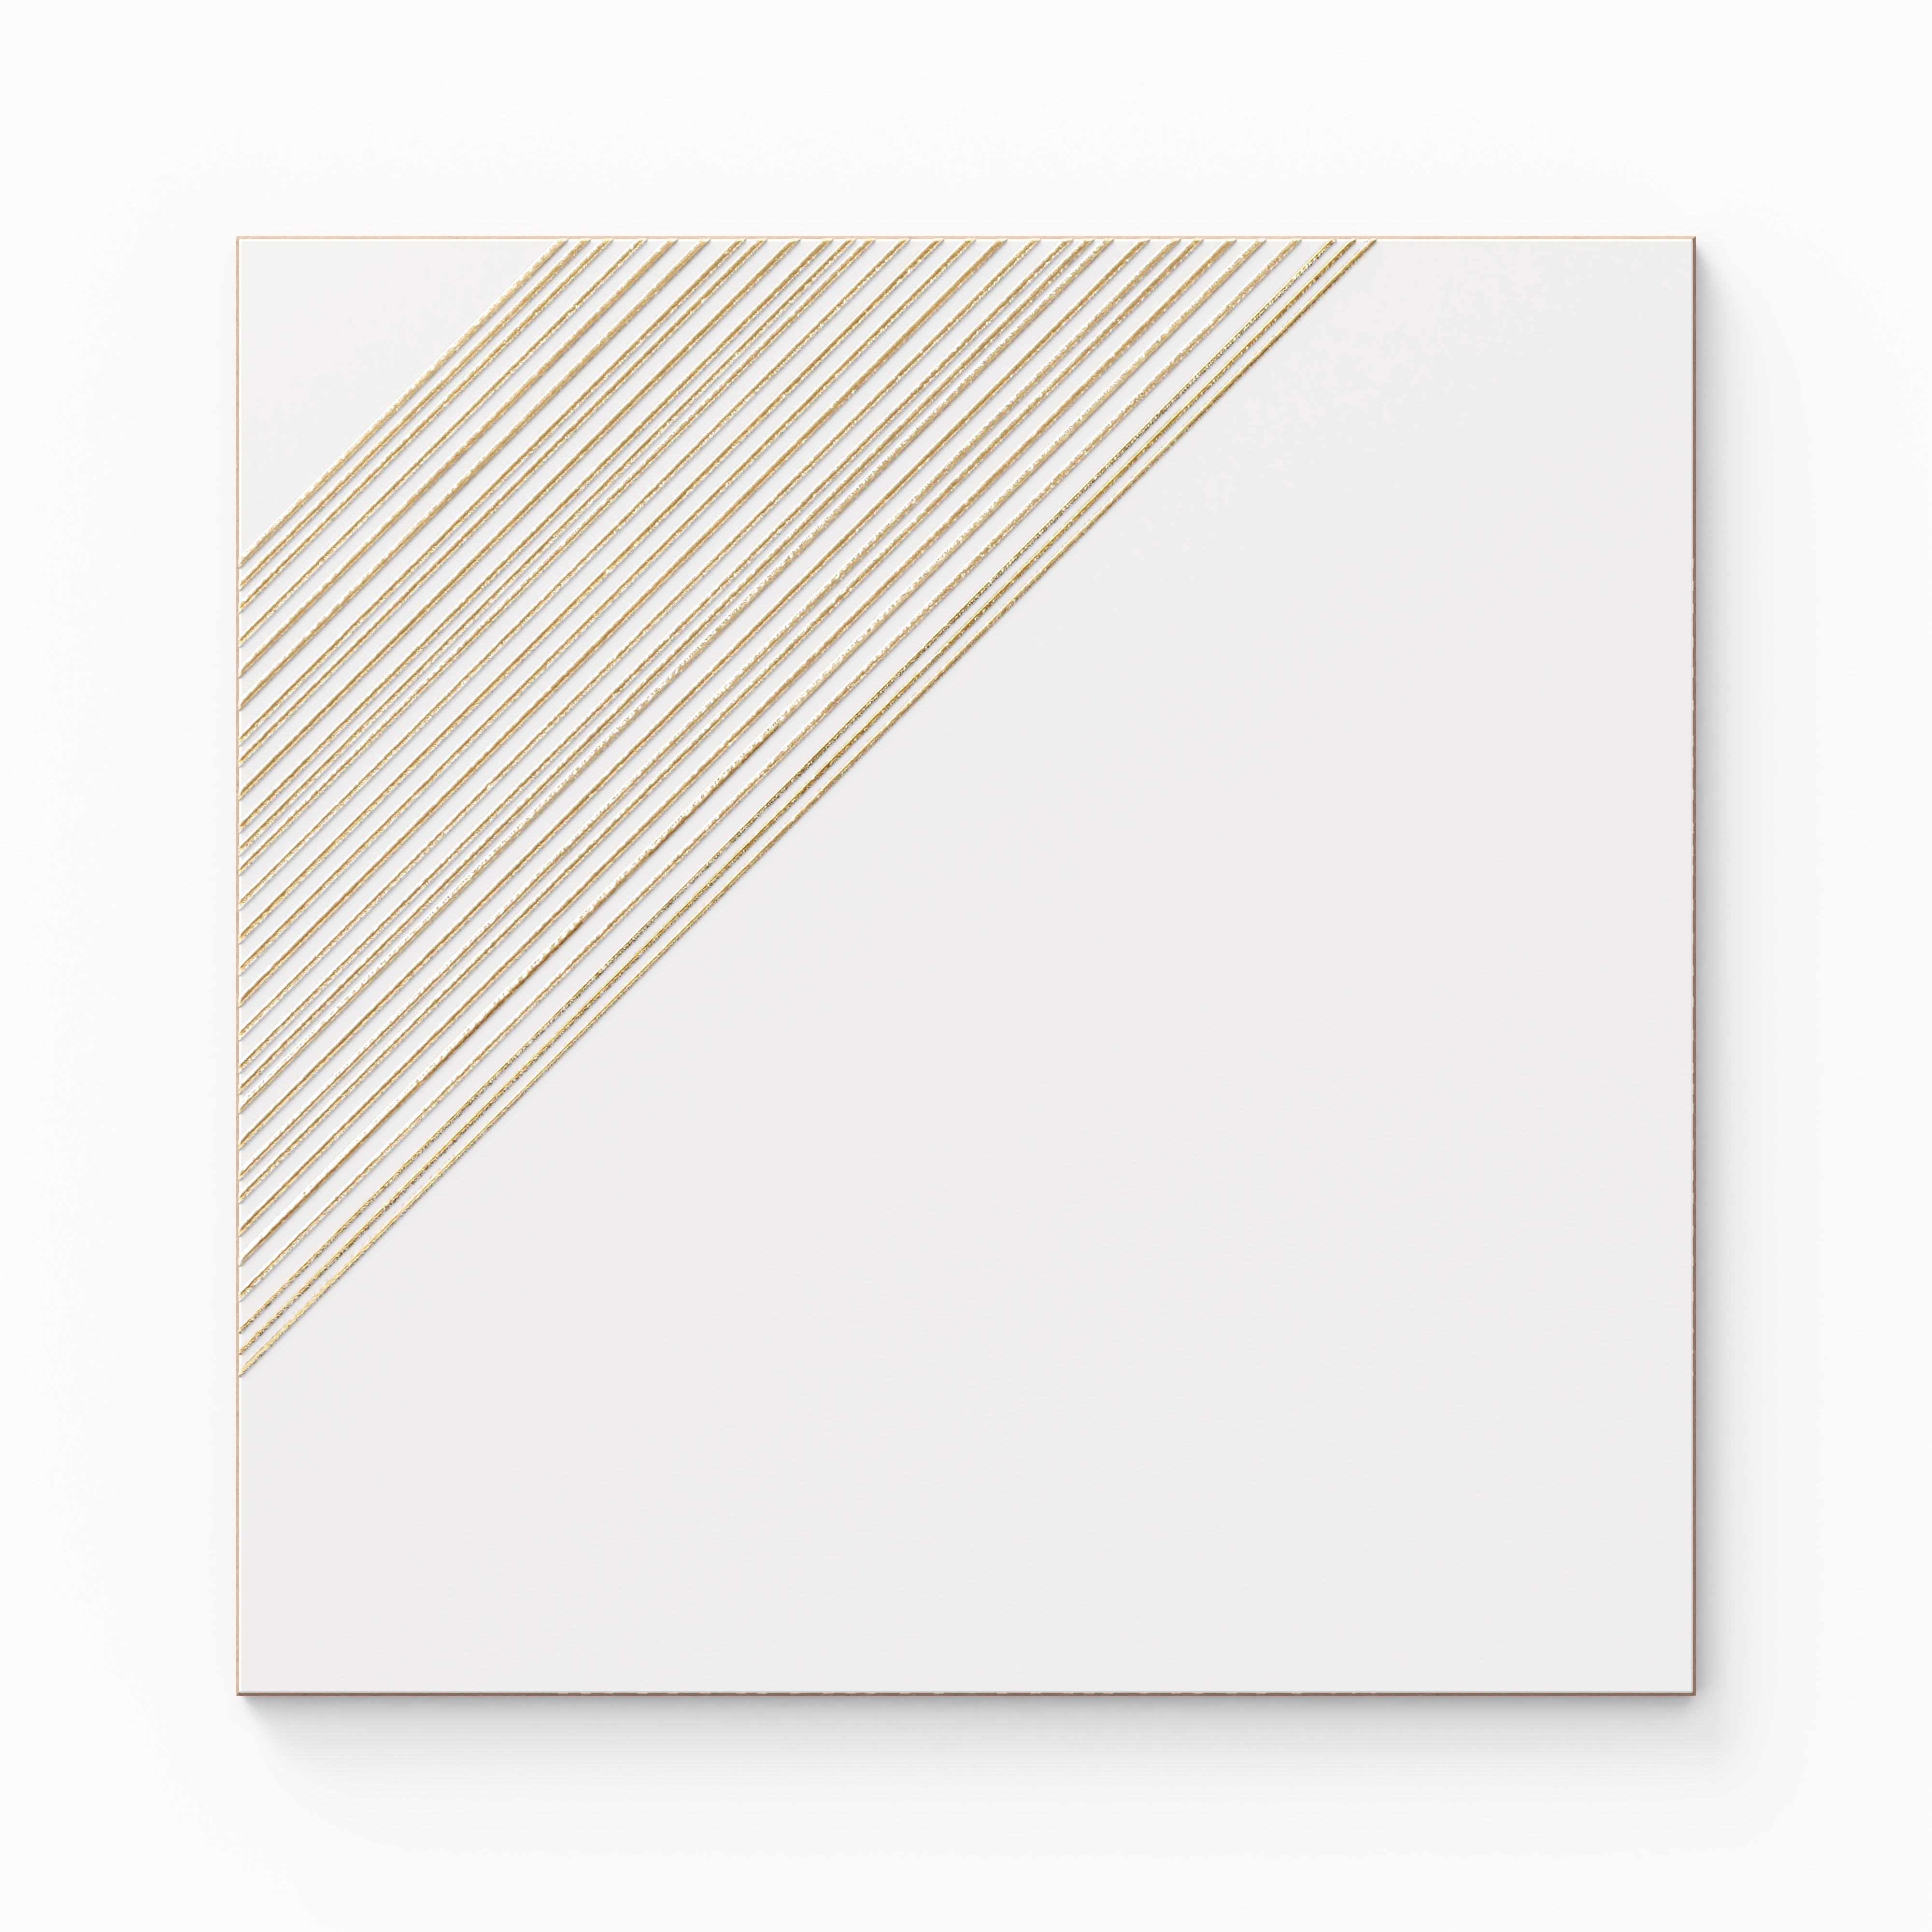 Estelle 12x12 Satin Ceramic Tile in Deco 3 White Gold